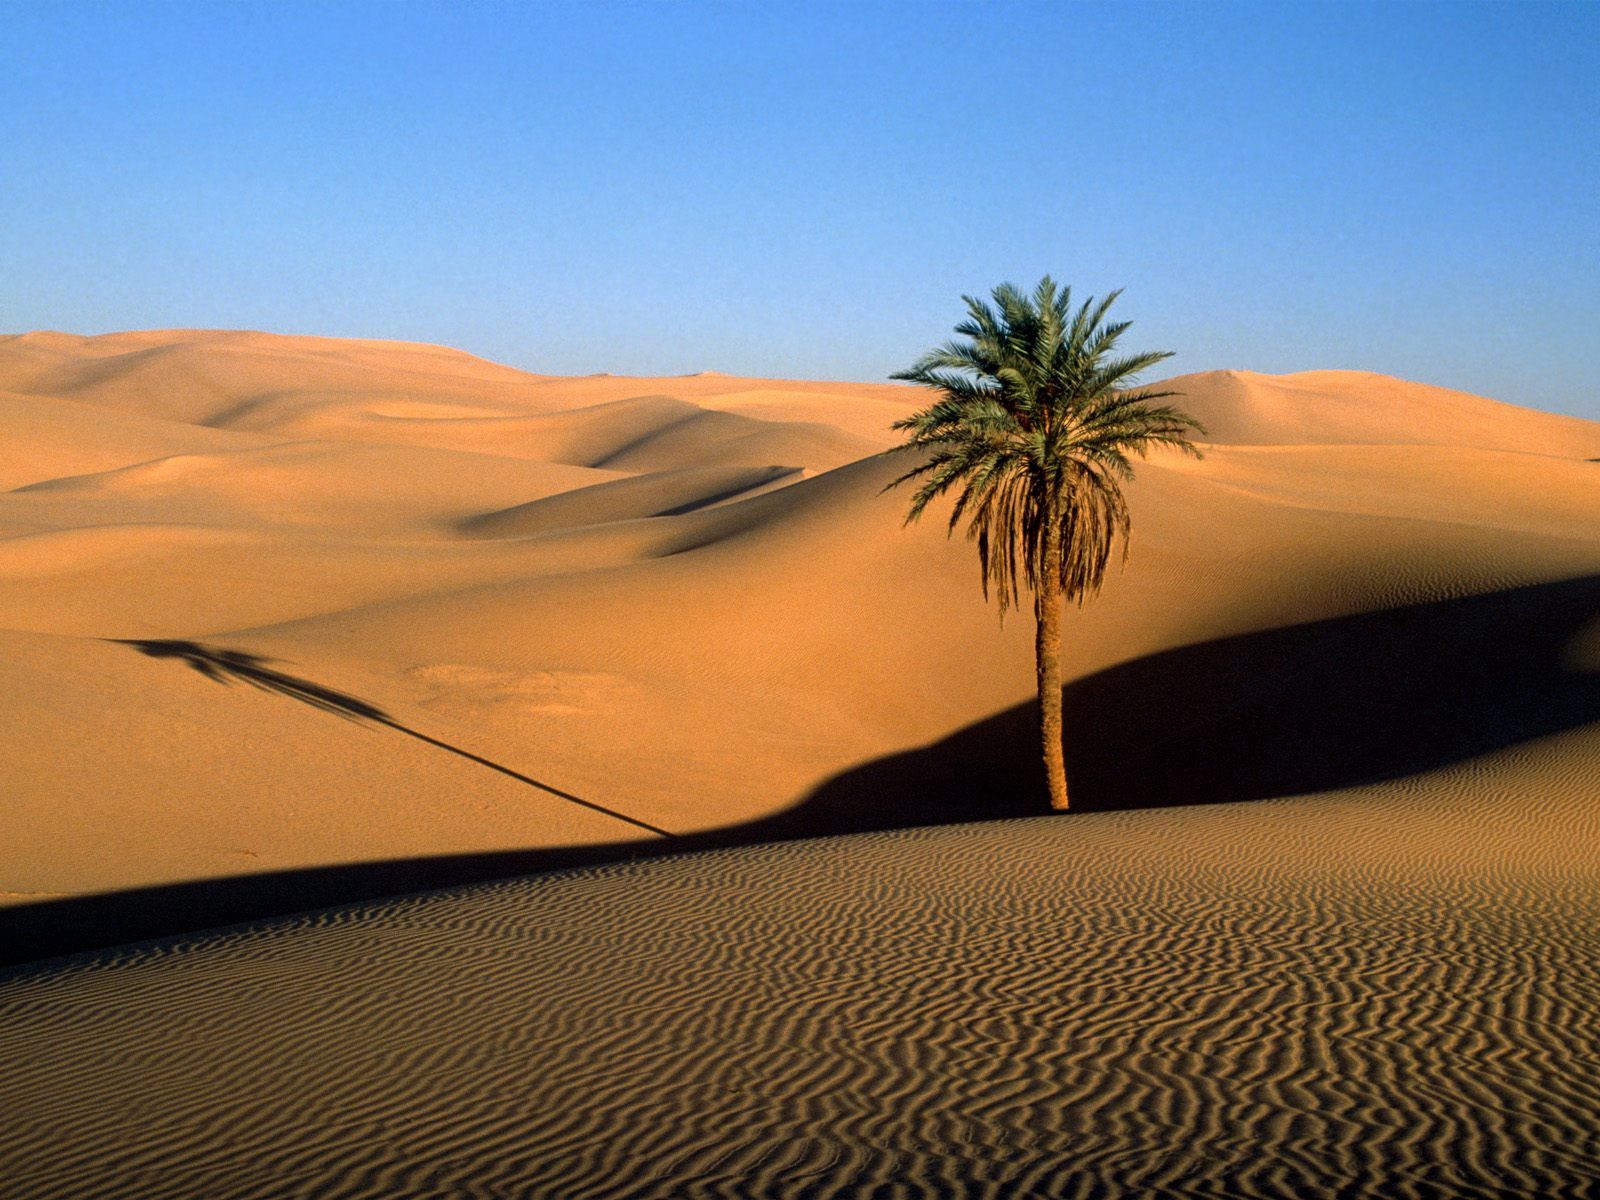 dunes, nature, sand, desert, wood, tree, palm, shadow, evening, links